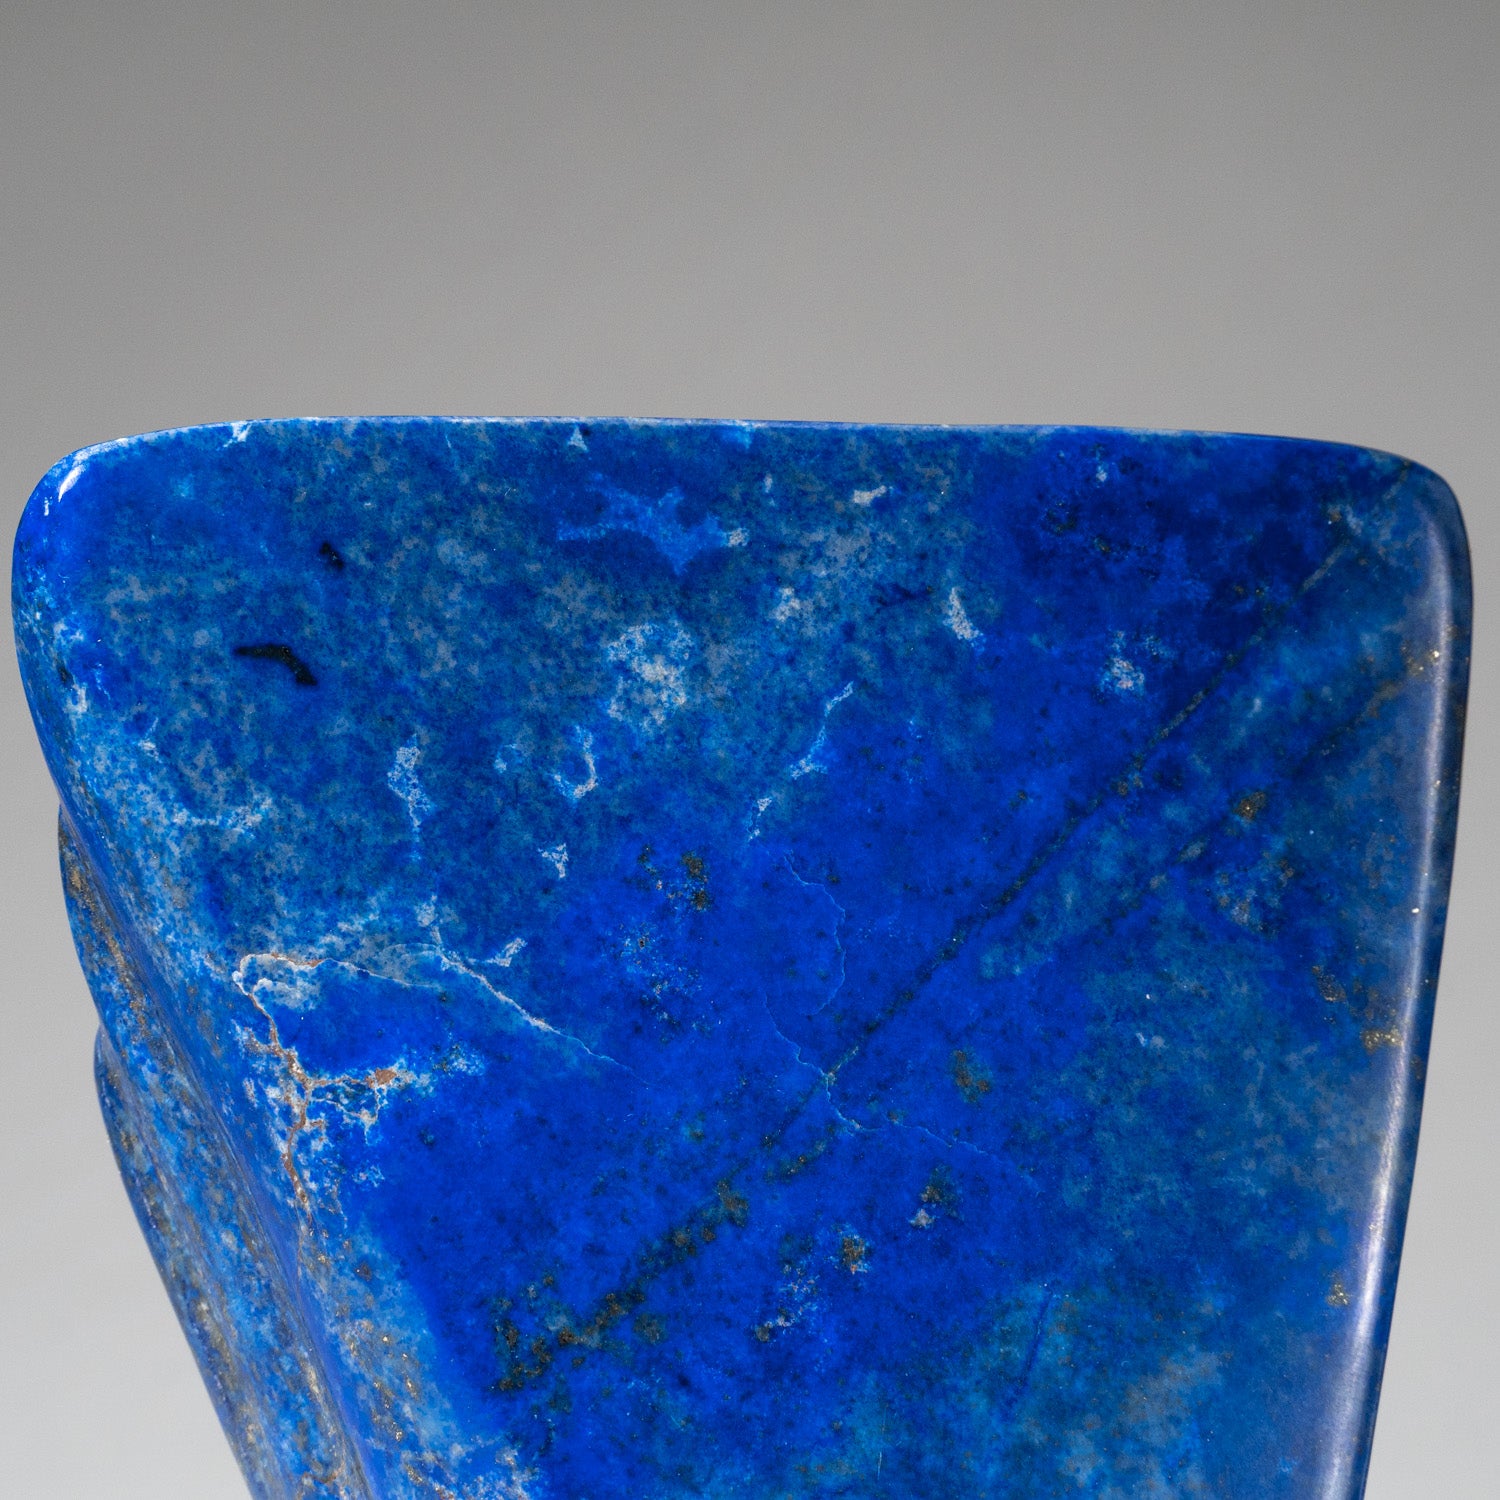 Polished Lapis Lazuli Freeform from Afghanistan (1.9 lbs)